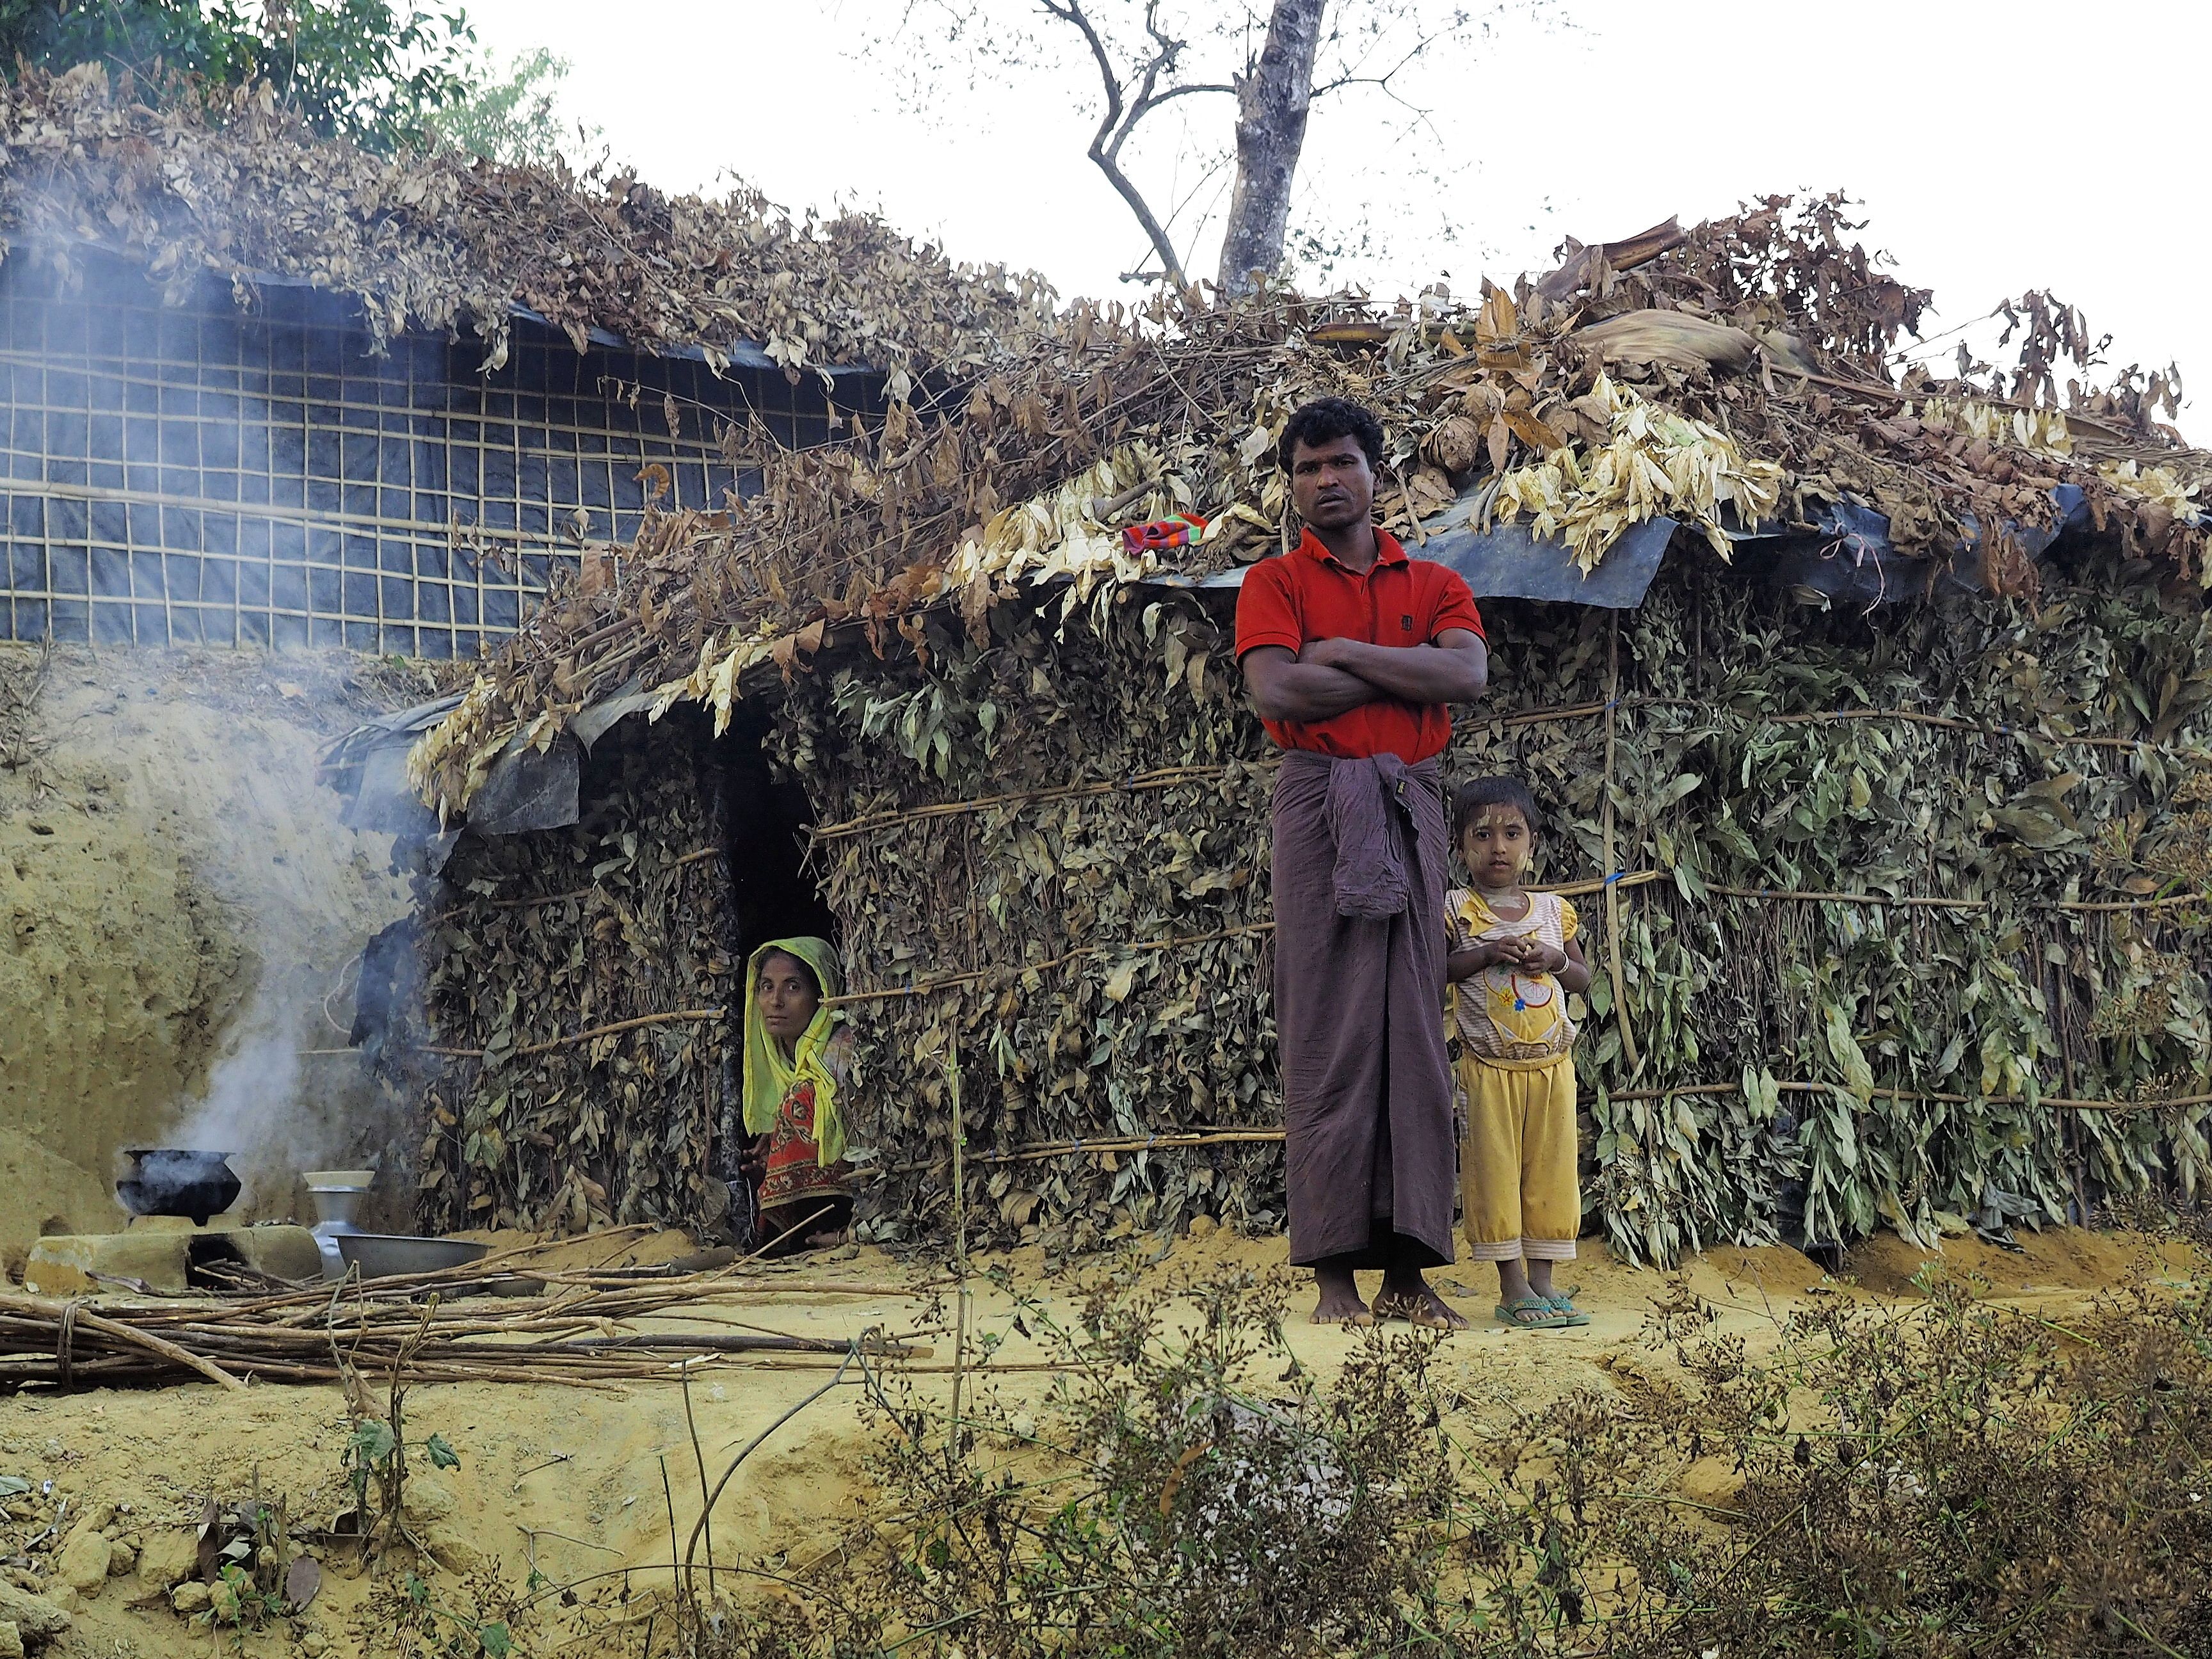 House built of leaves in informal refugee camp. Image by Doug Bock Clark. Bangladesh, 2017.